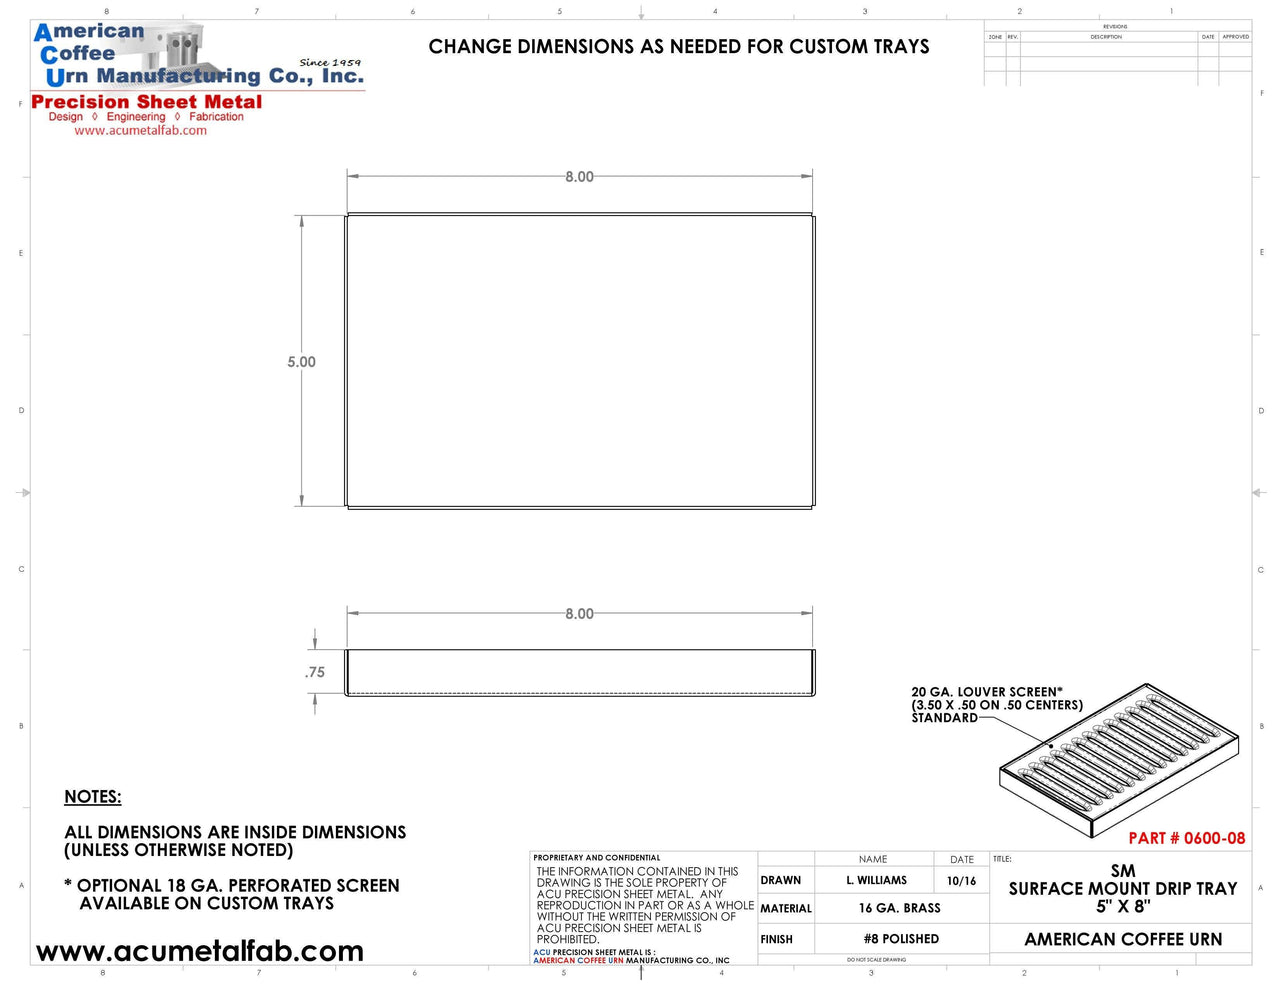 5" X 8" X 3/4" Surface Mount Drip Tray | No Drain | Brass - ACU Precision Sheet Metal